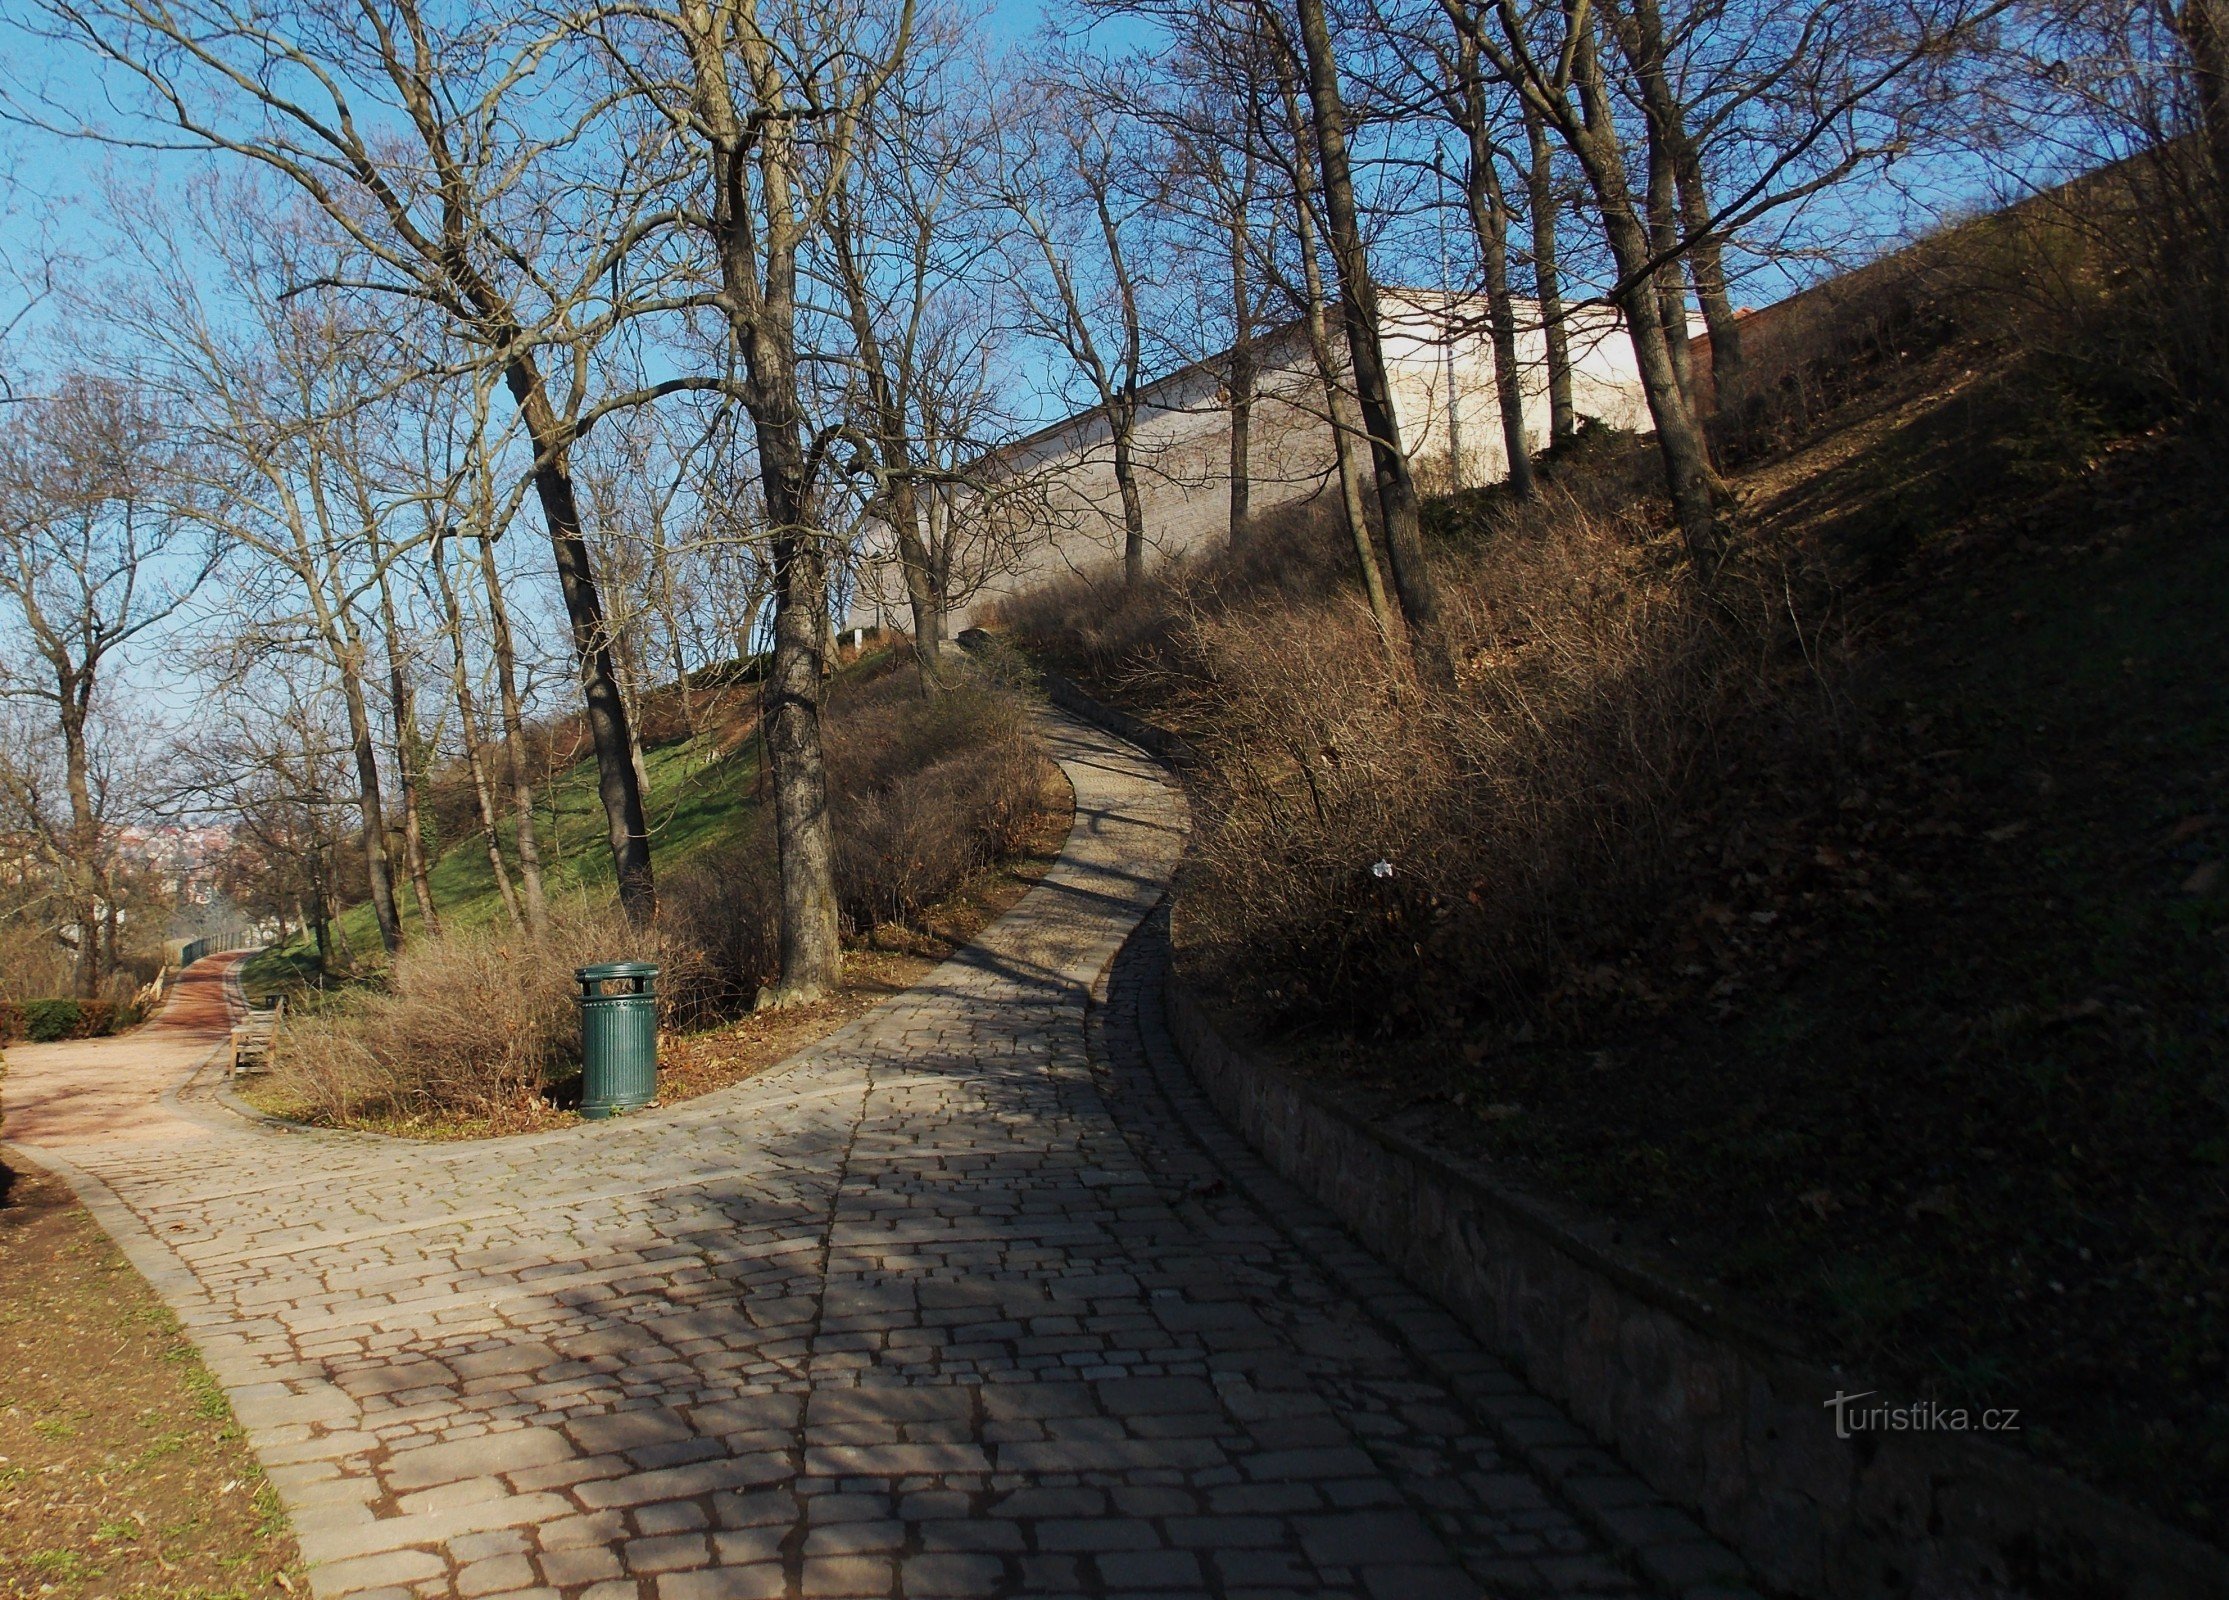 A walk through the city park Špilberk in Brno